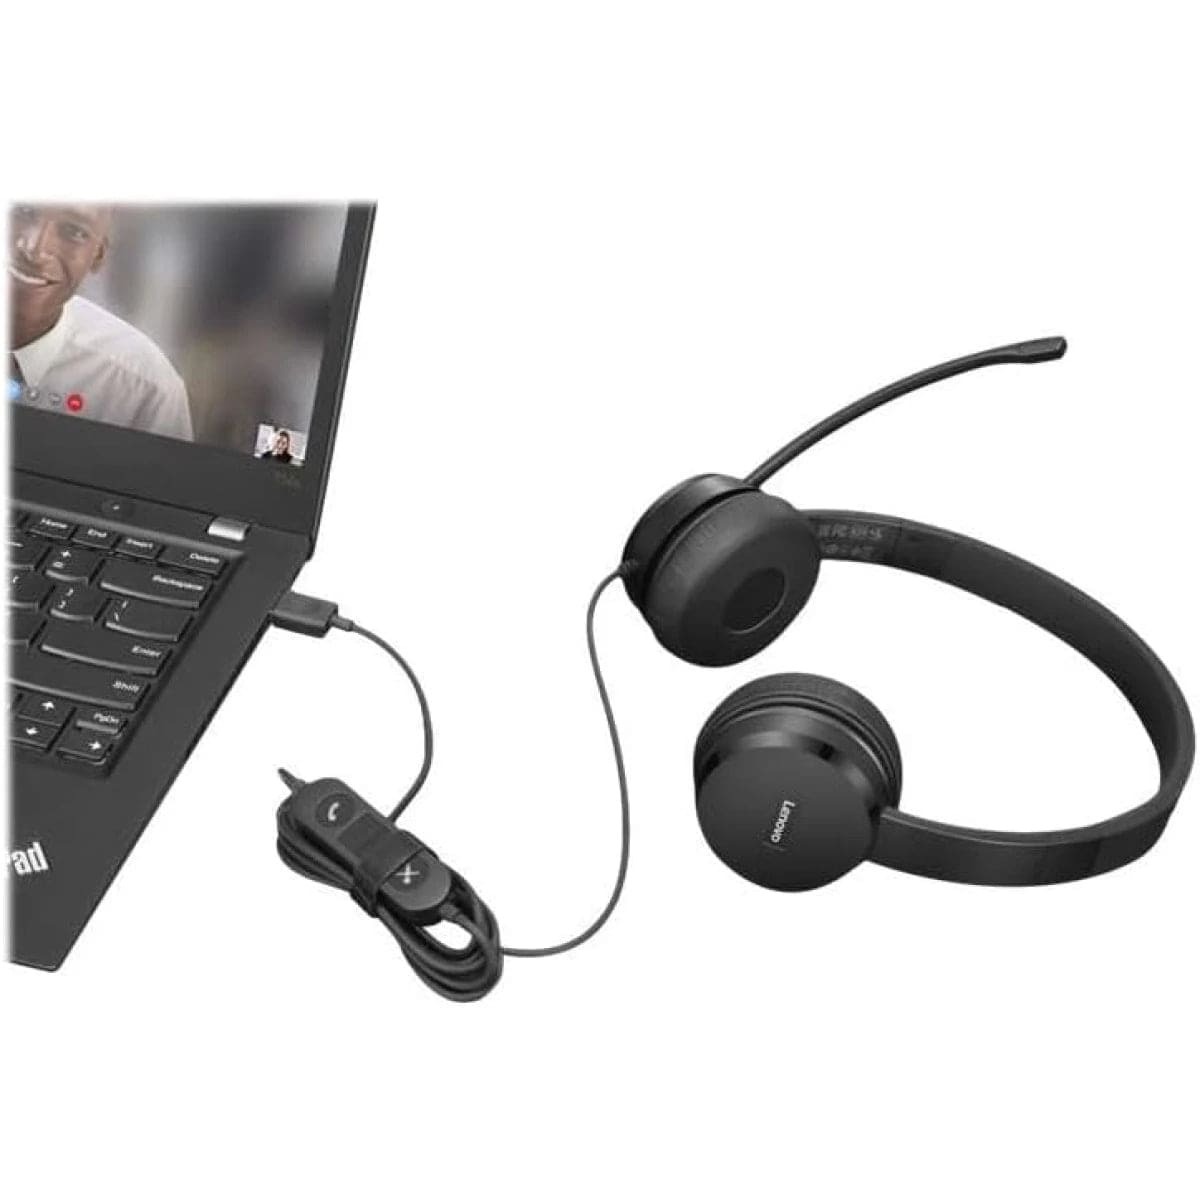 LENOVO headset Lenovo USB-A Stereo On-Ear Business Lightweight Headset w/ Control Box & Noise Cancellation - Black 4XD1K18260